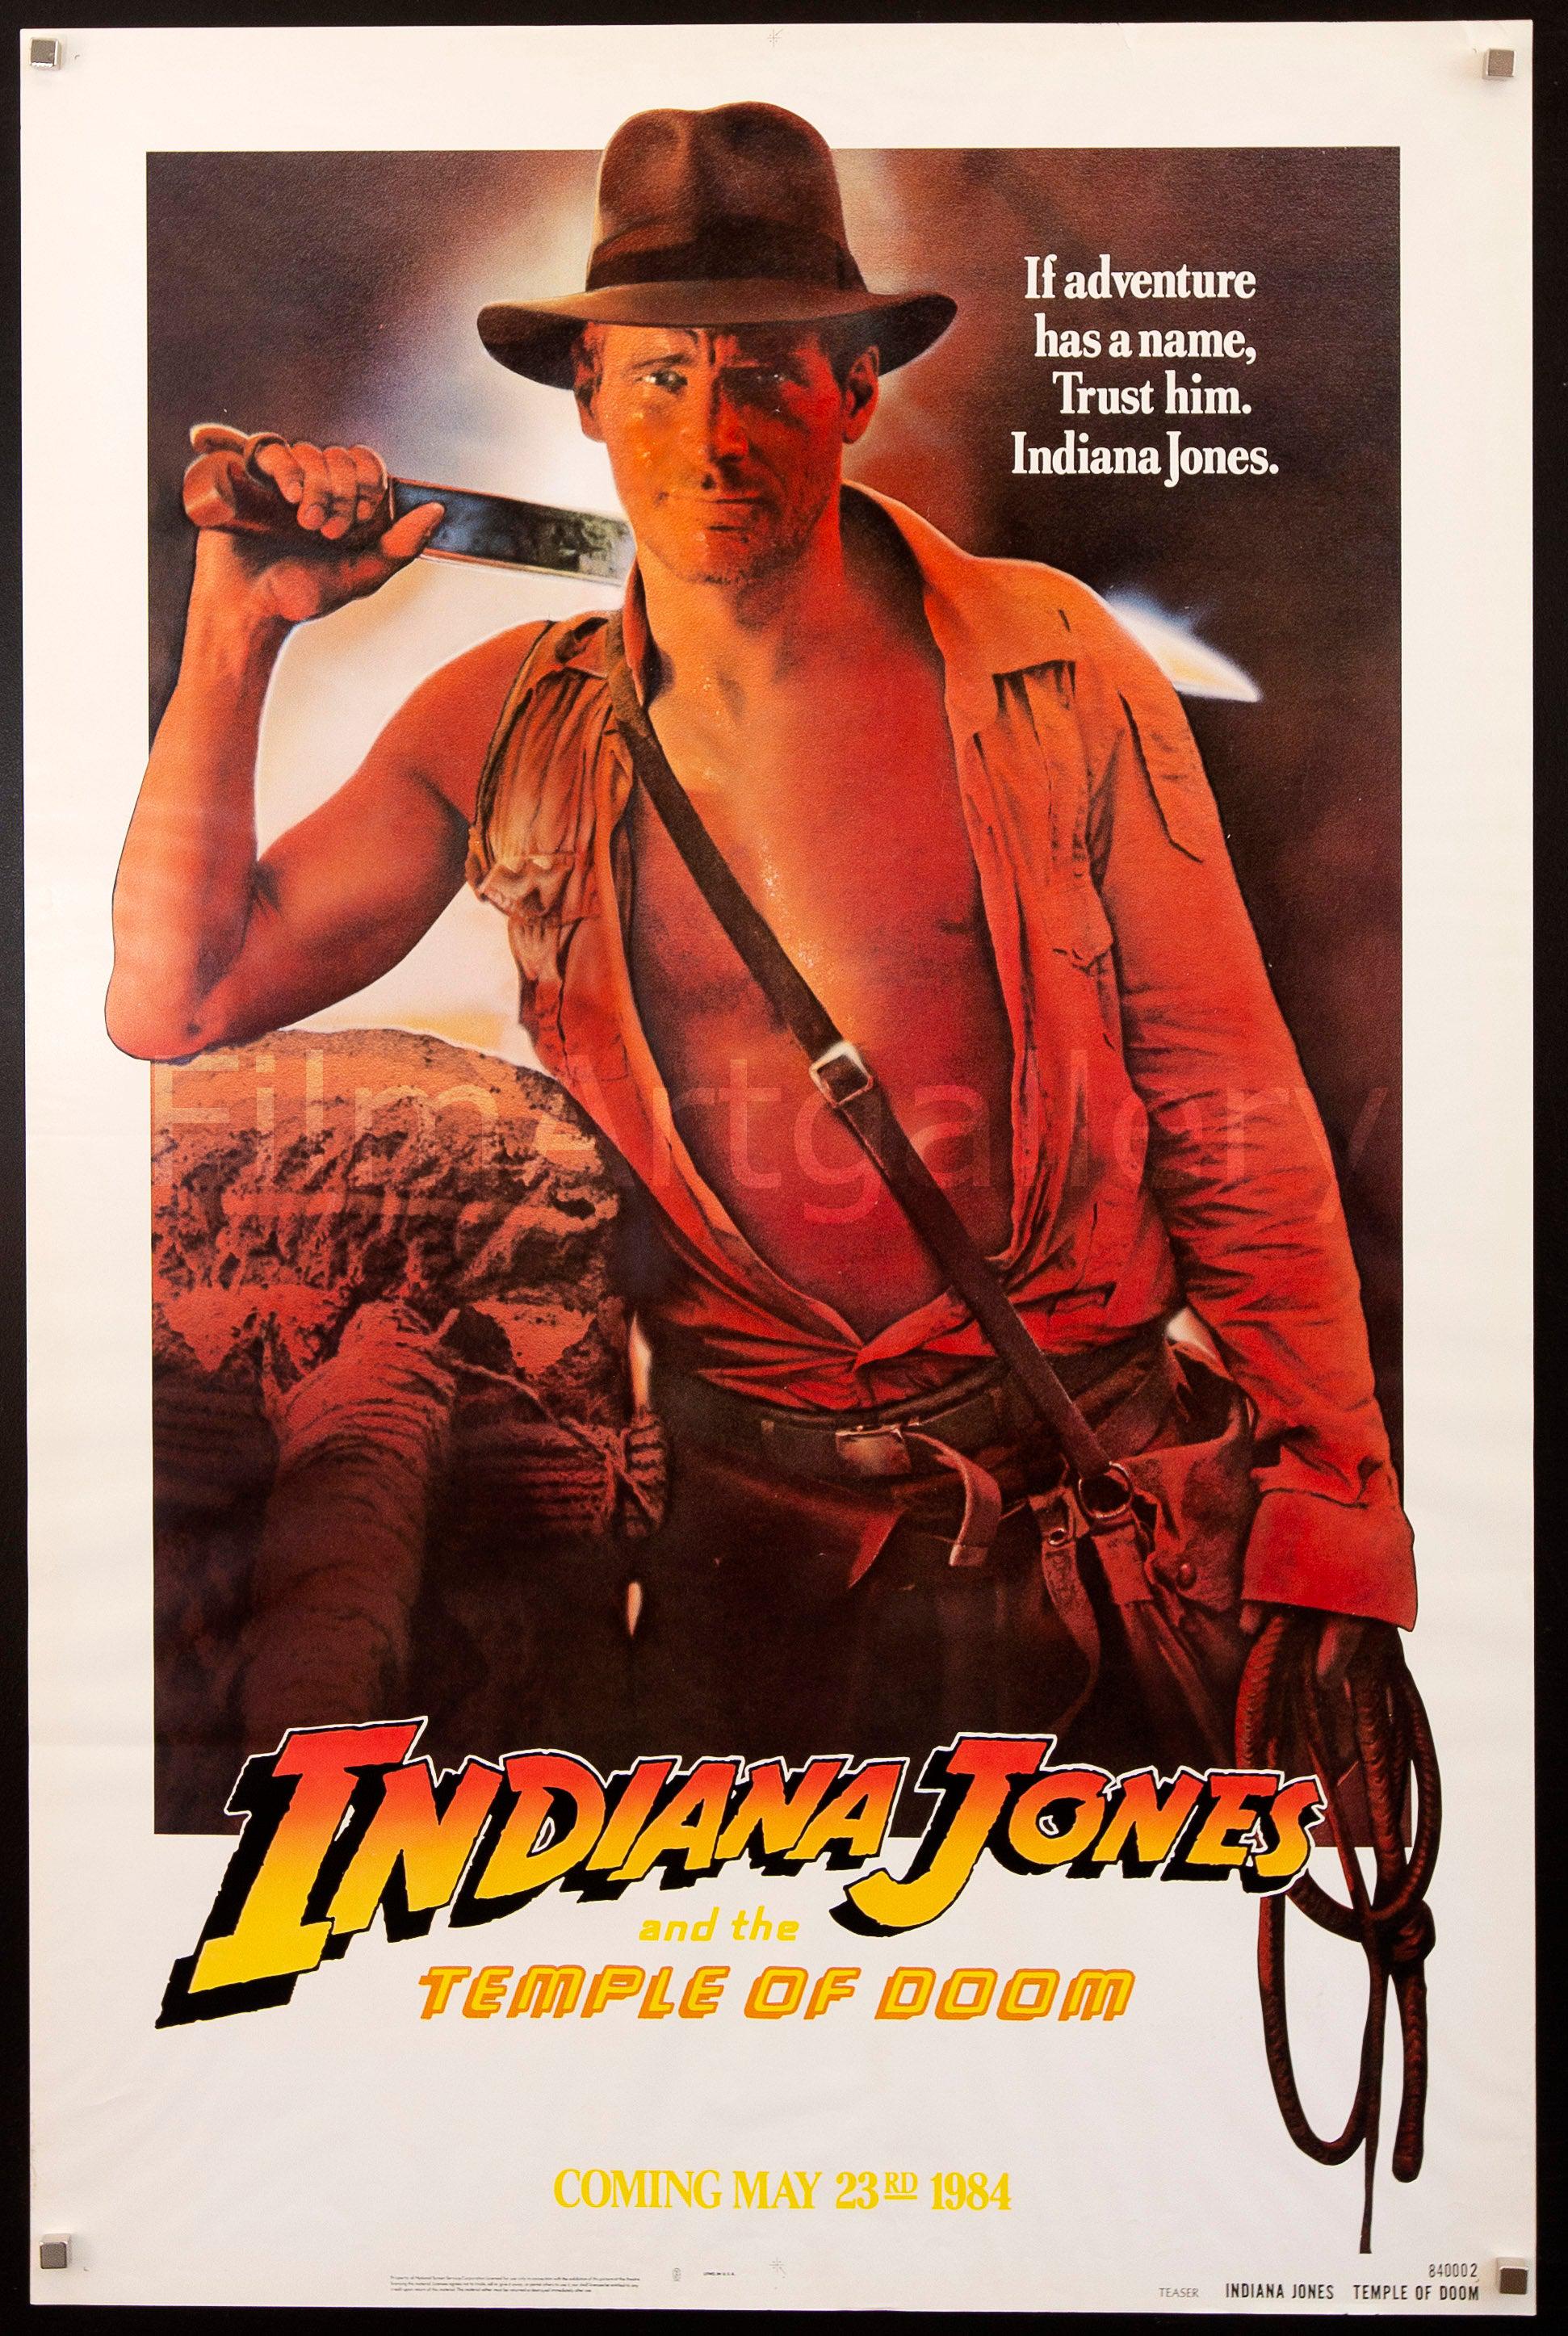 Why Temple Of Doom Is The Best Indiana Jones Film, Movies